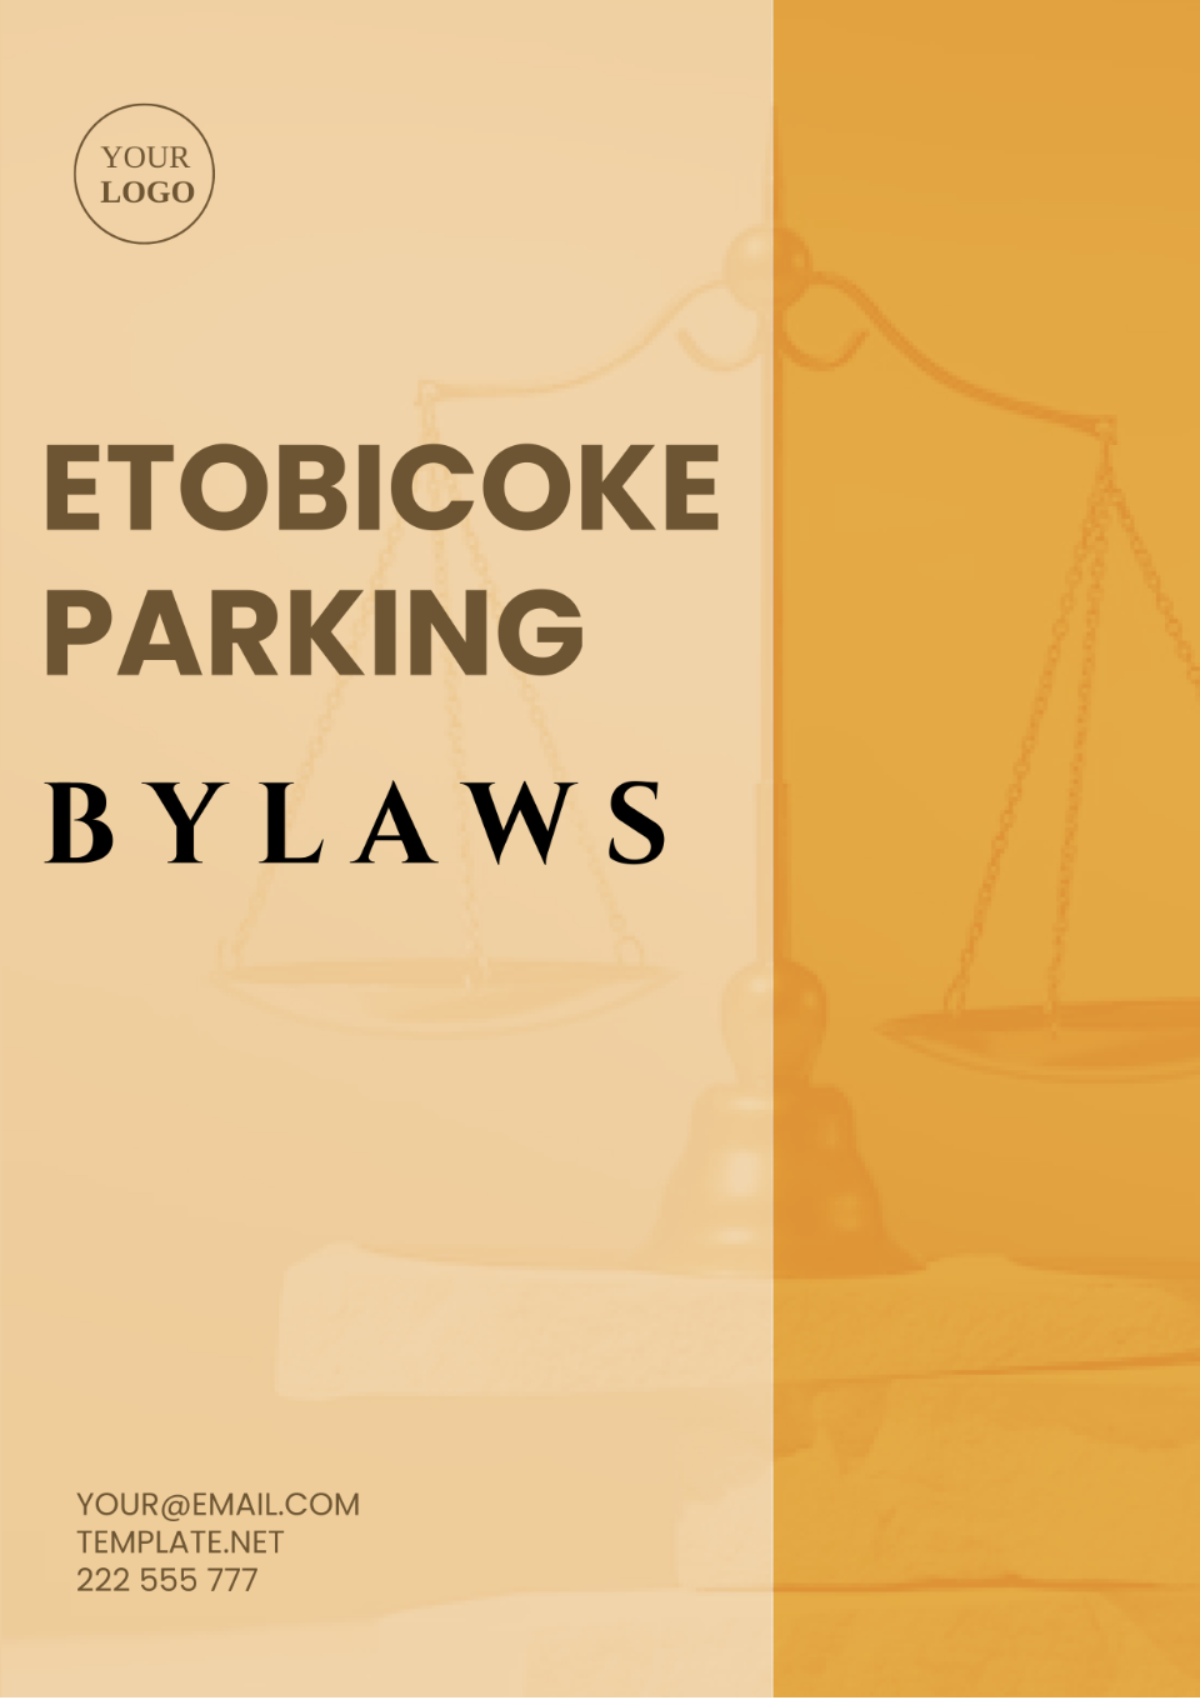 Etobicoke Parking Bylaws Template